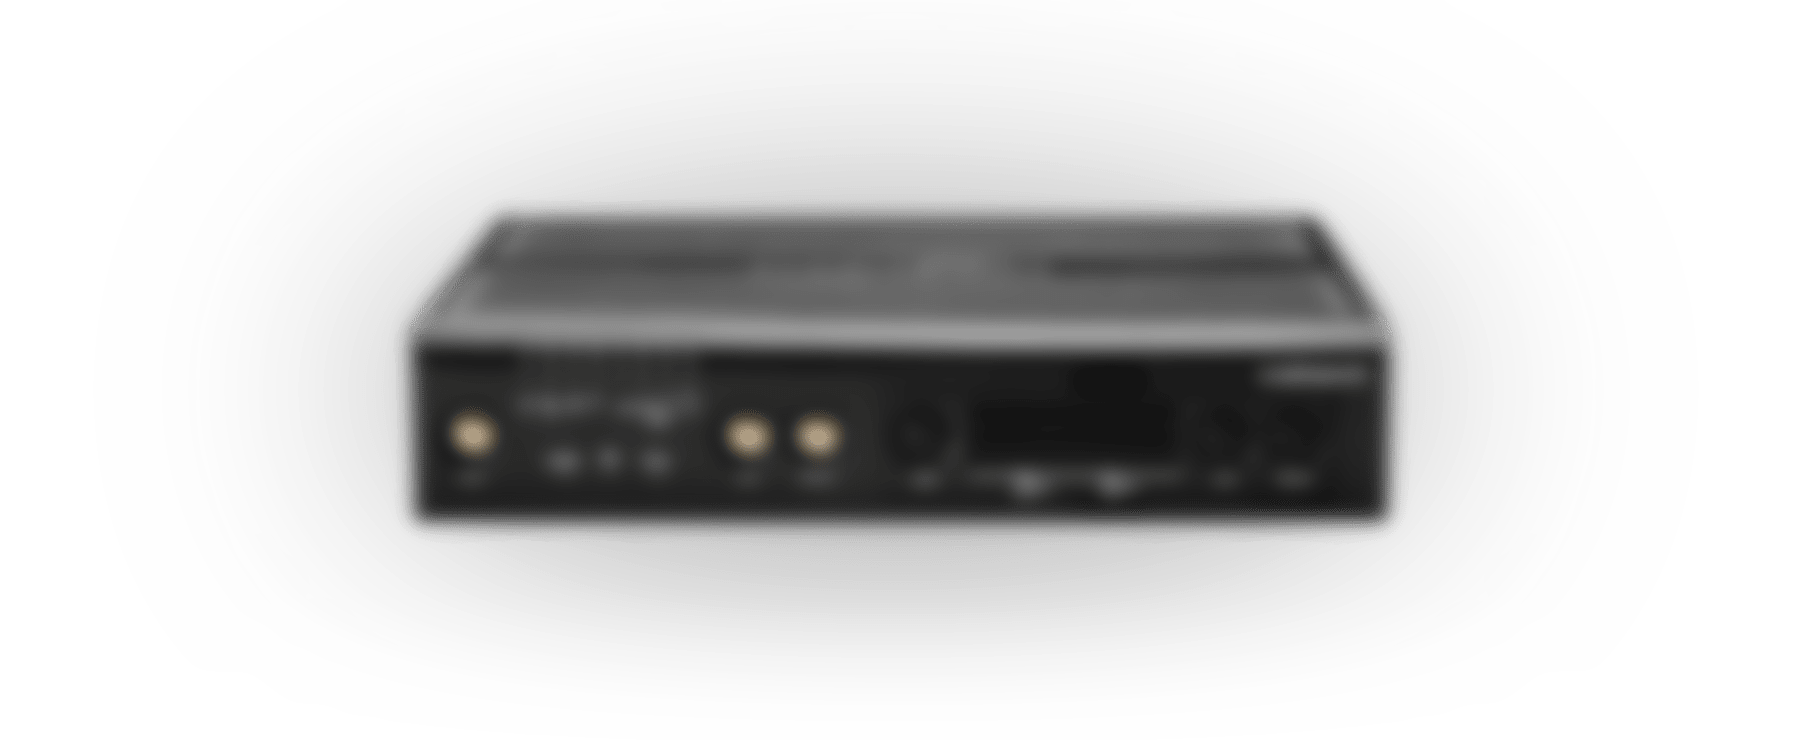 AER2200 Series Enterprise Router